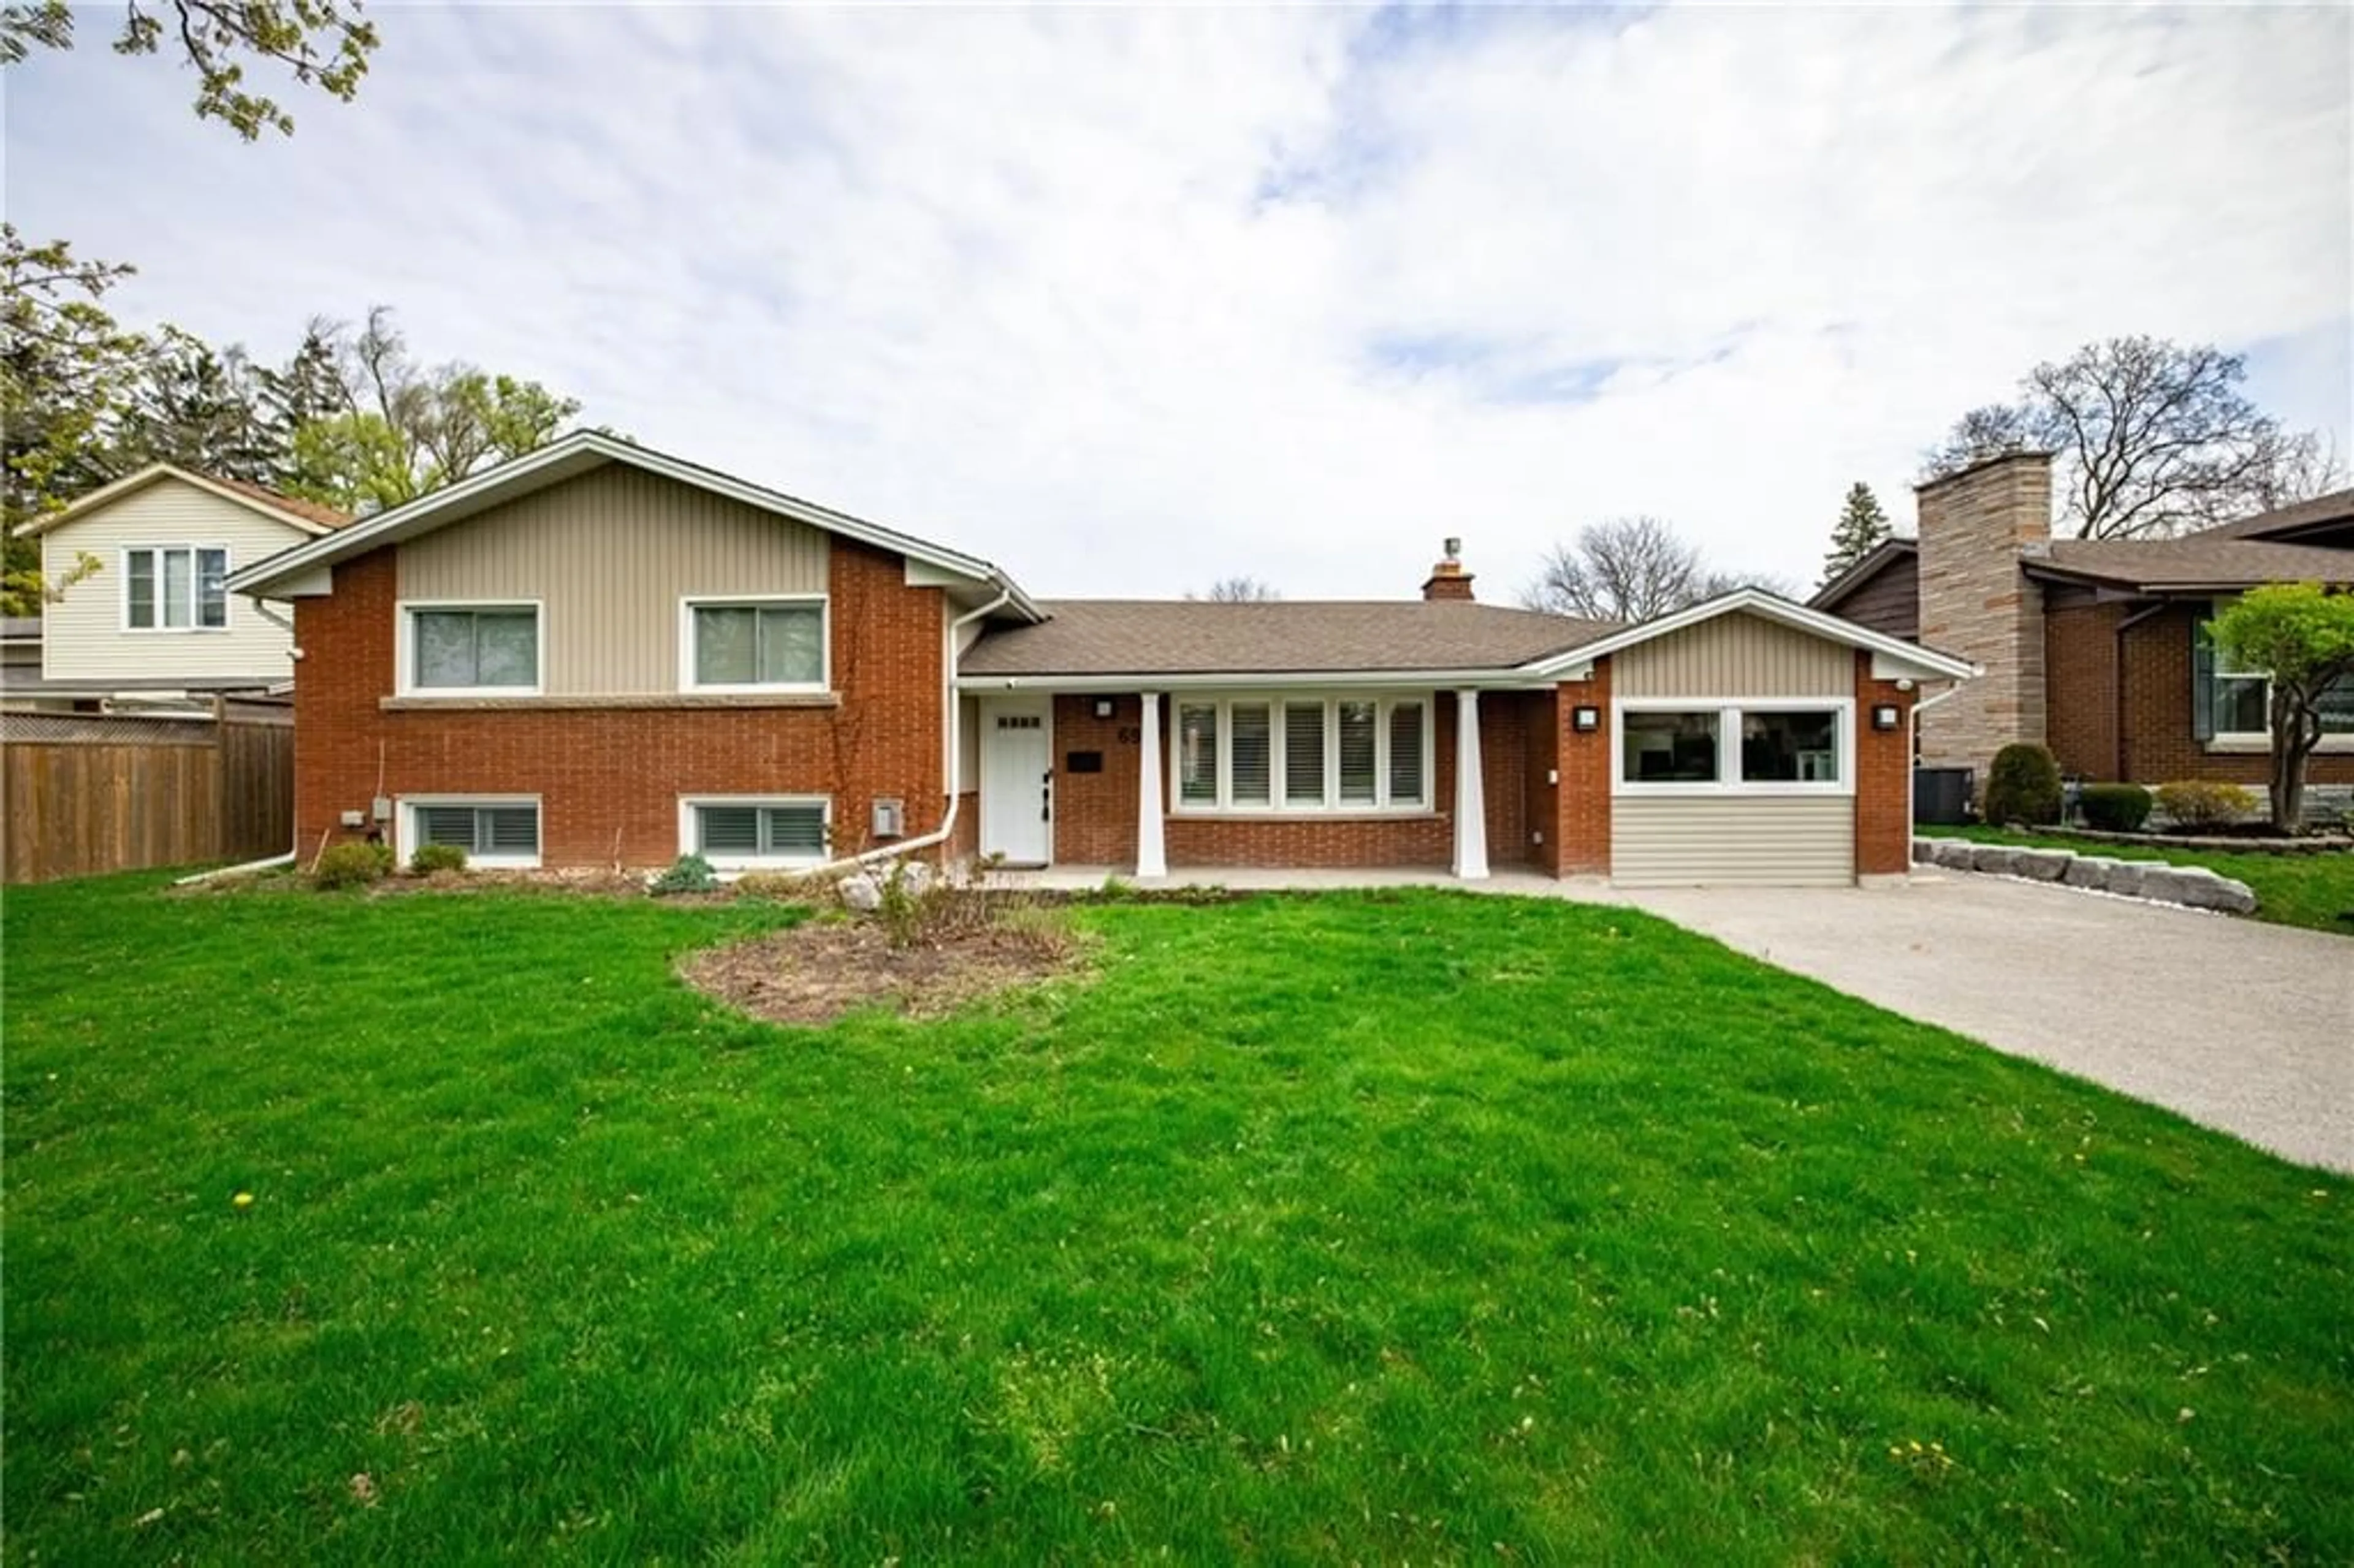 Home with brick exterior material for 6977 Mcgill St, Niagara Falls Ontario L2J 1L8